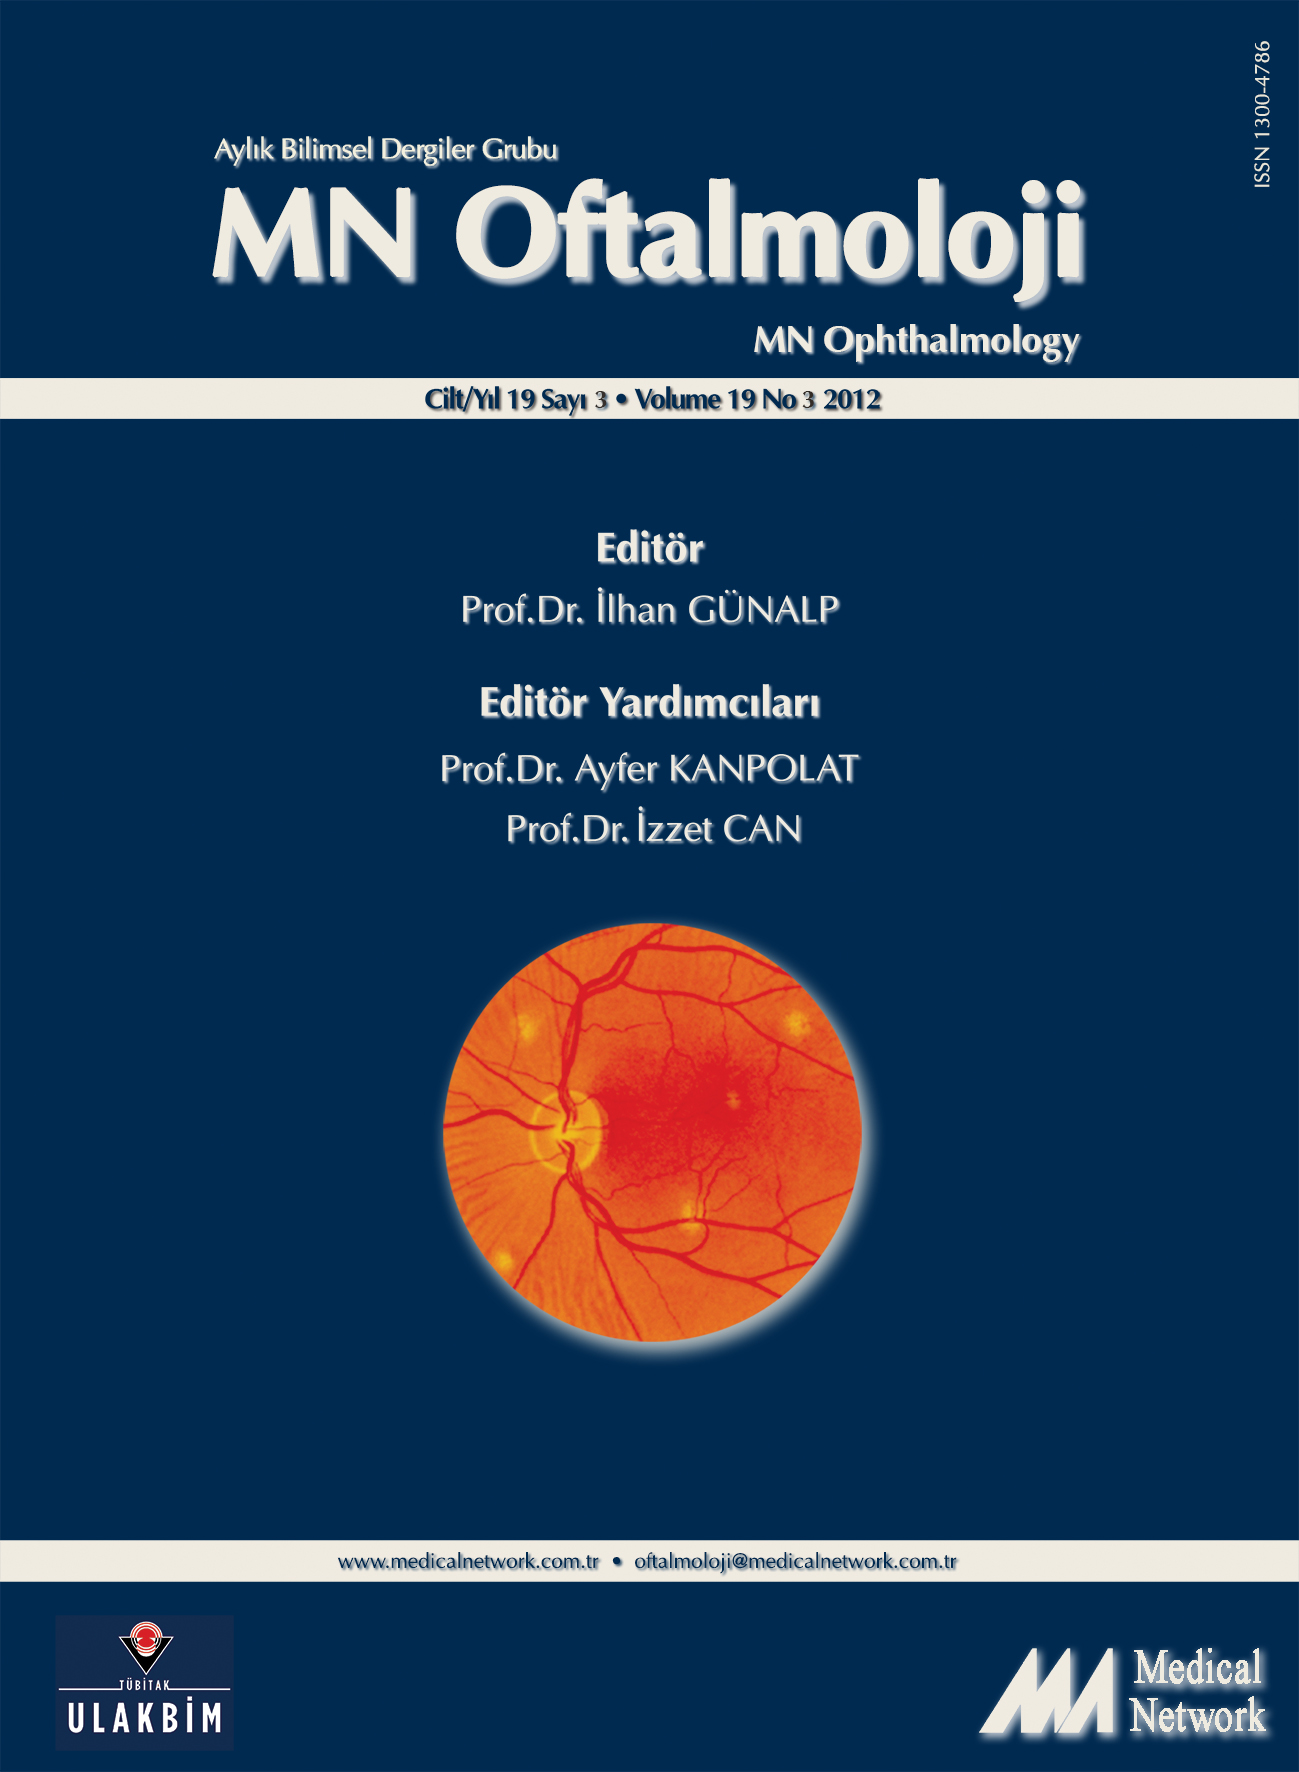 <p>MN Oftalmoloji Cilt: 19 Say: 3 2012 (MN Ophthalmology Volume: 19 No 3 2012)</p>